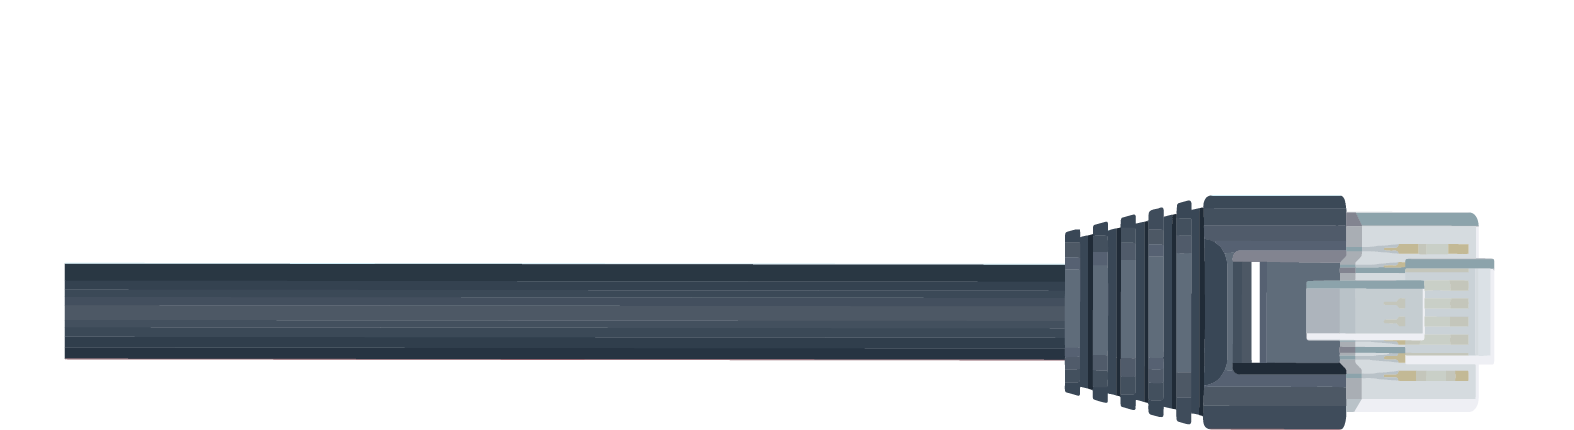 network-nic